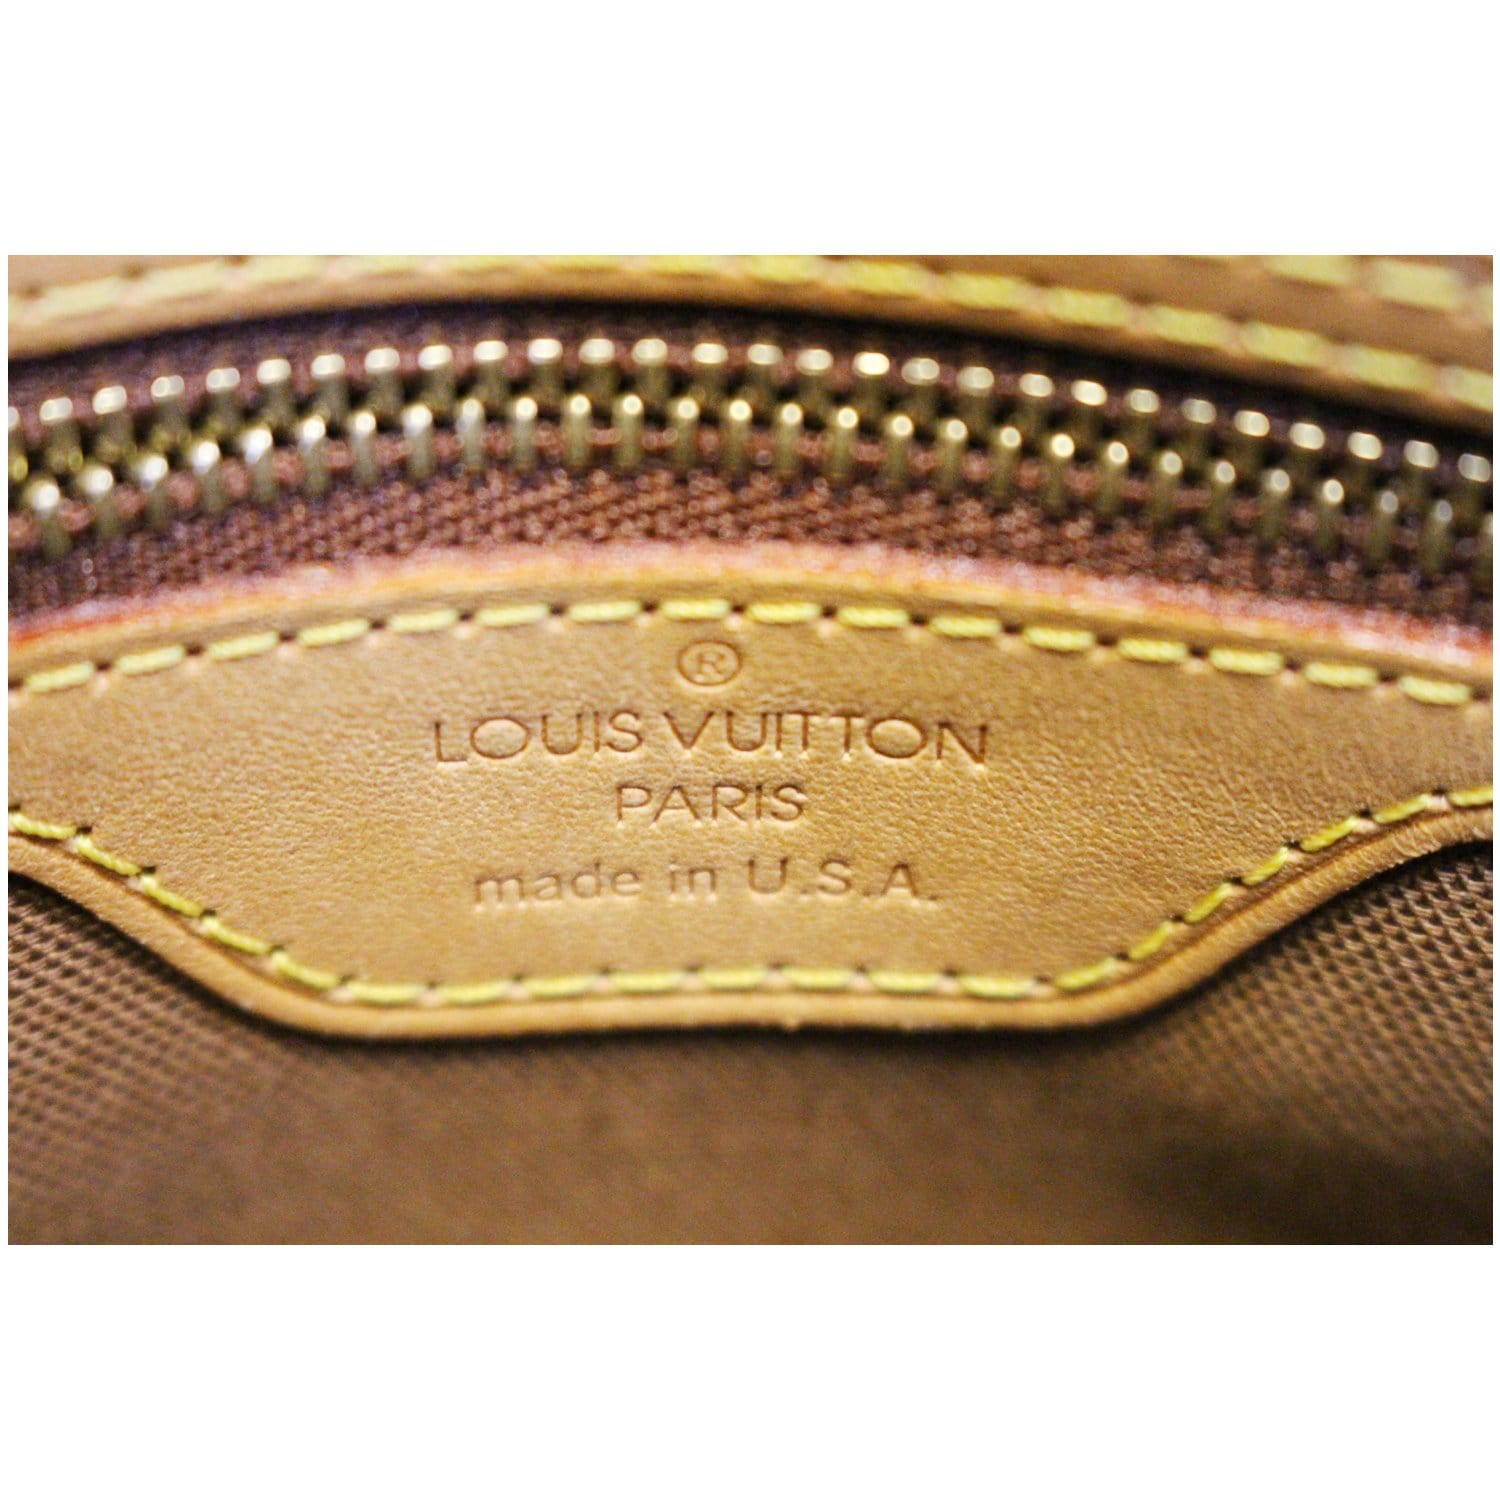 Date Code & Stamp] Louis Vuitton Tivoli PM Monogram Canvas